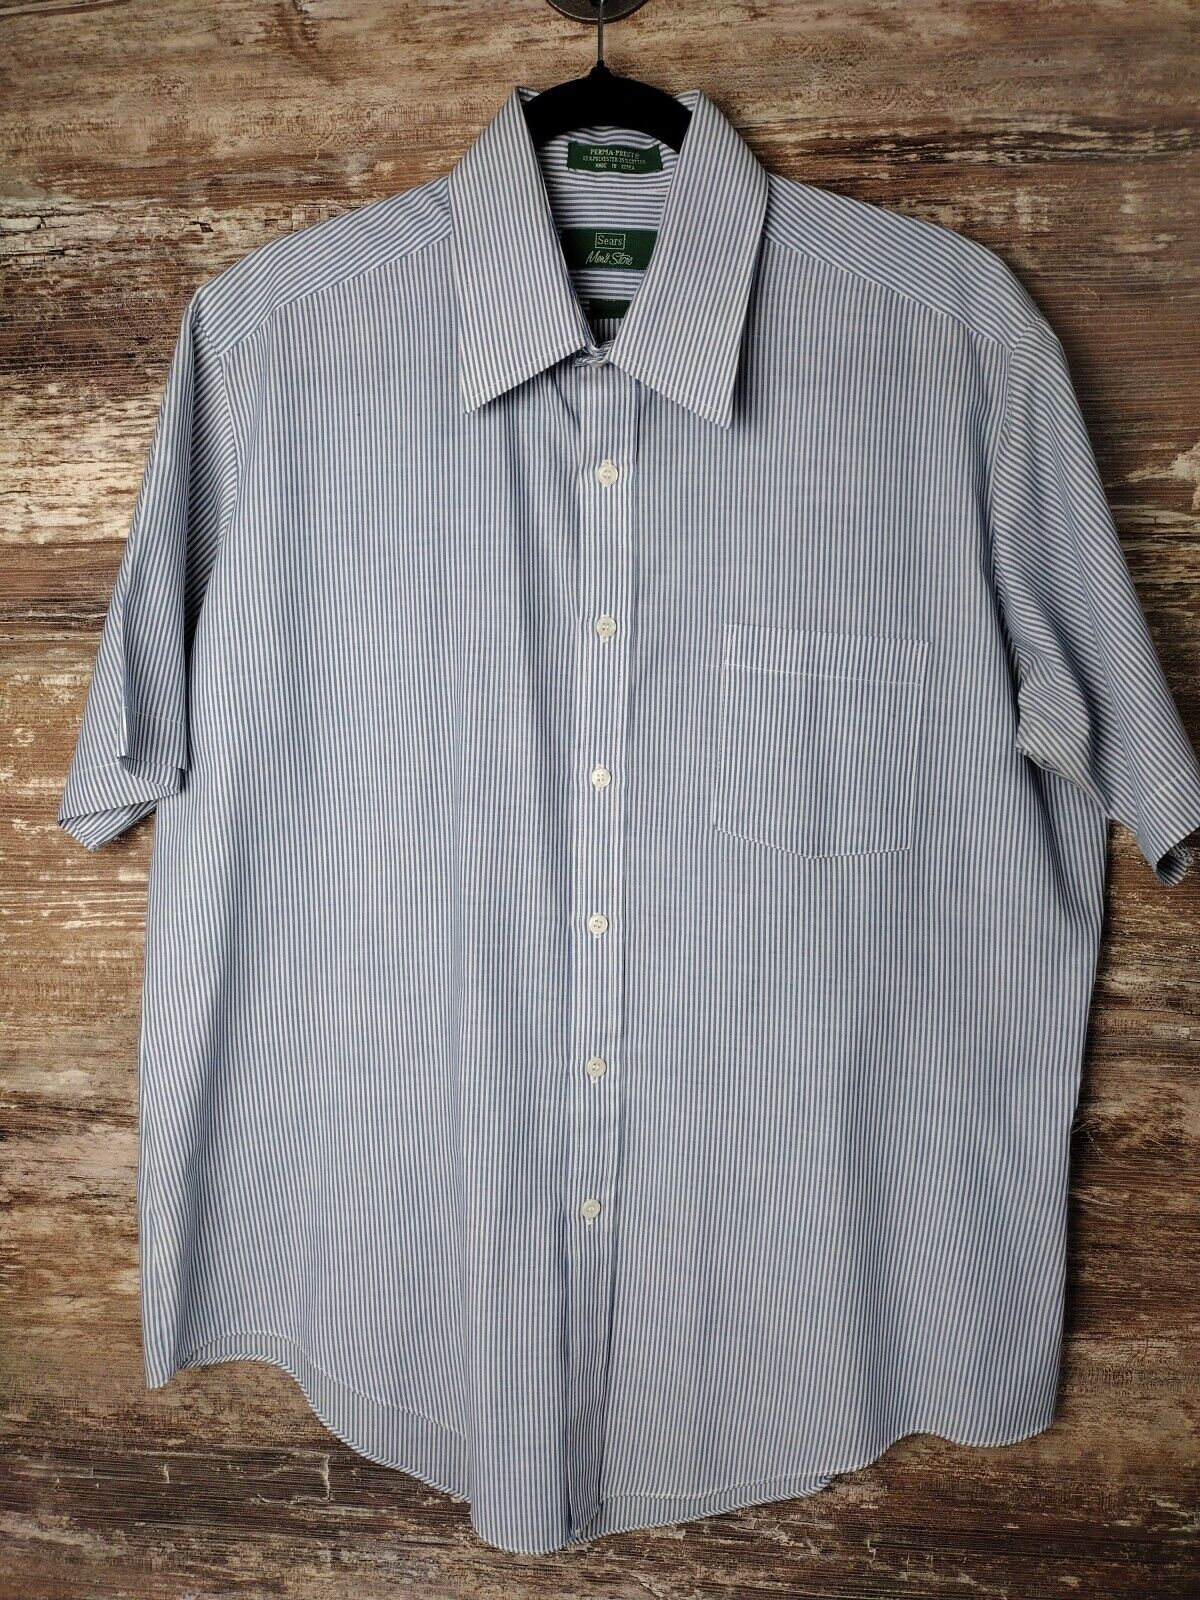 Vintage Sears The Men\'s Store Button Down Shirt Size Medium Short Sleeve VTG